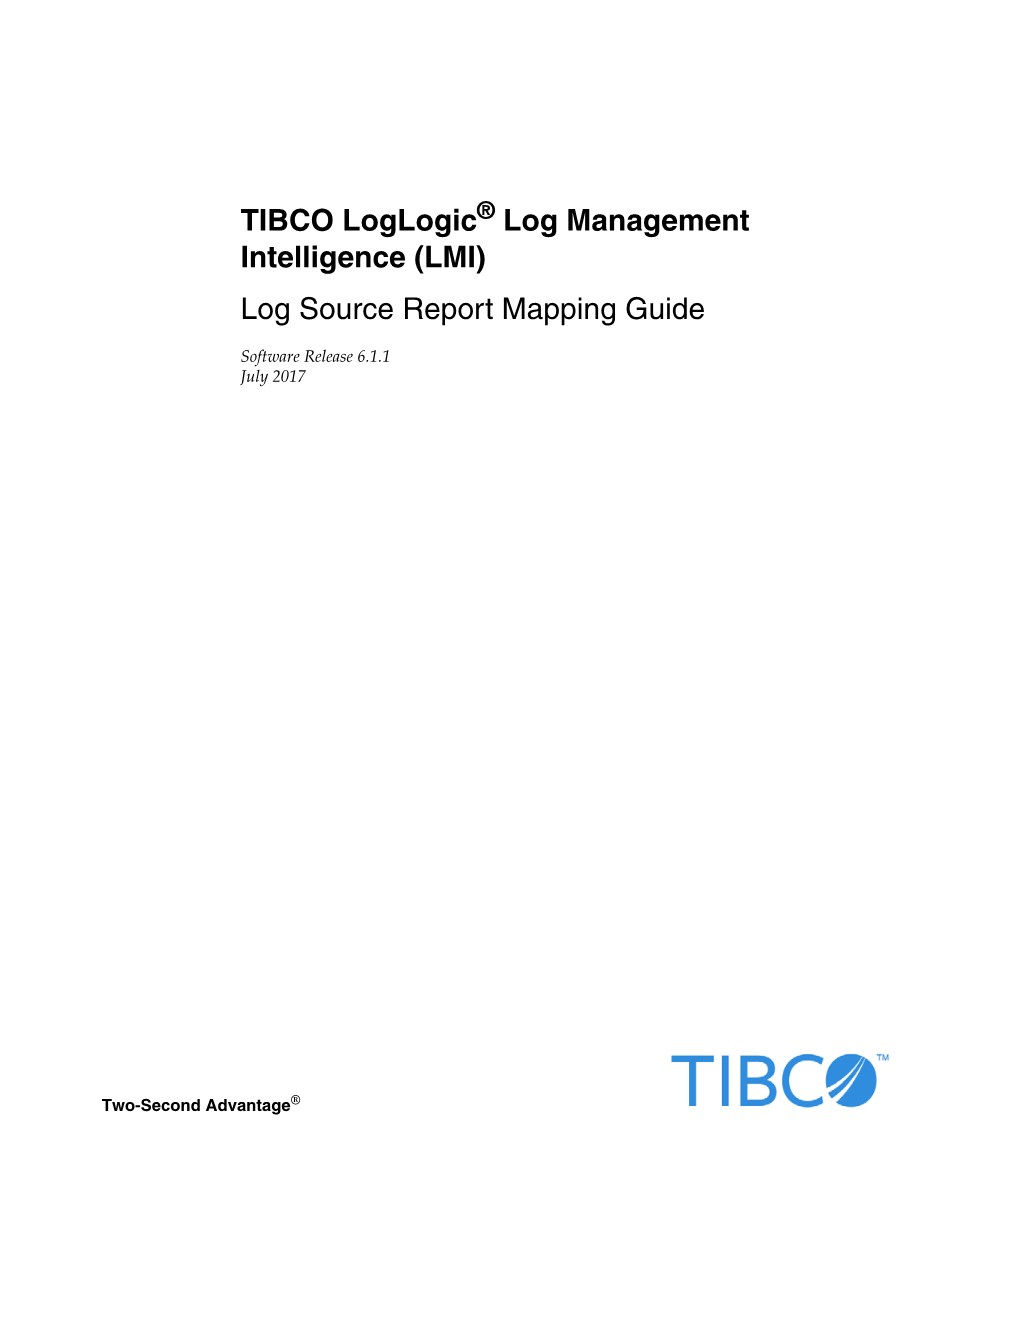 Loglogic Log Source Report Mapping Guidebook